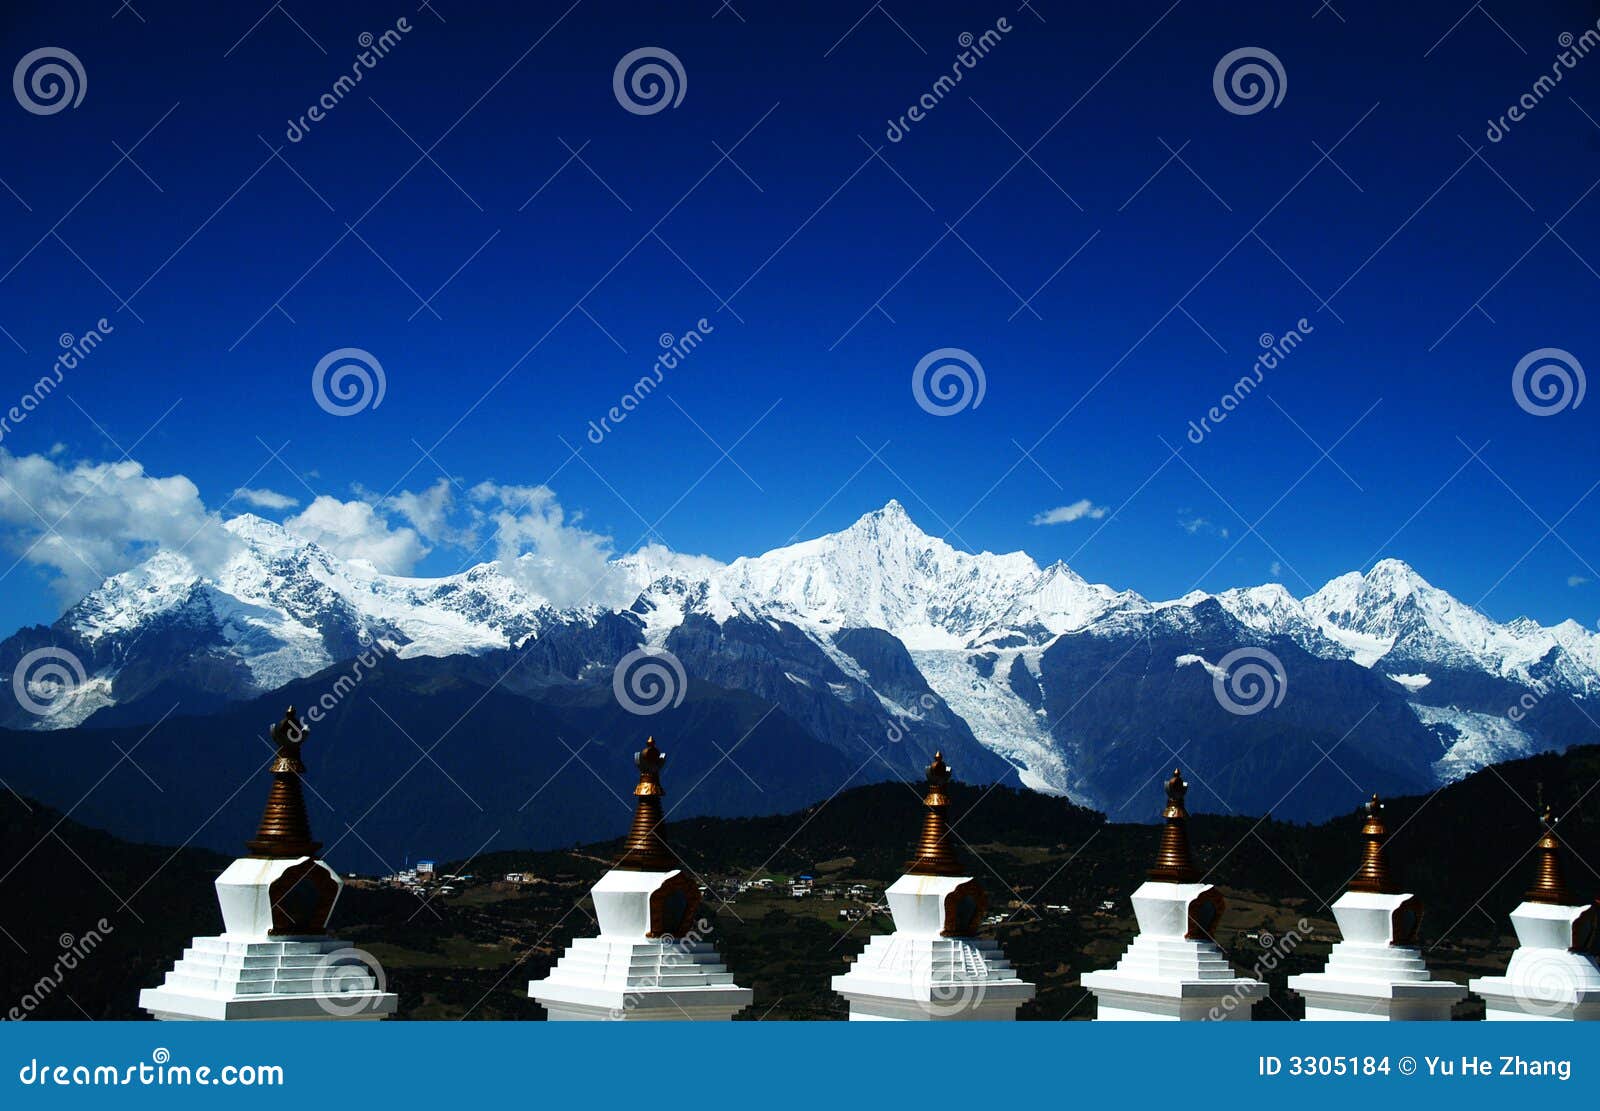 tibetan pilgrimage mountain